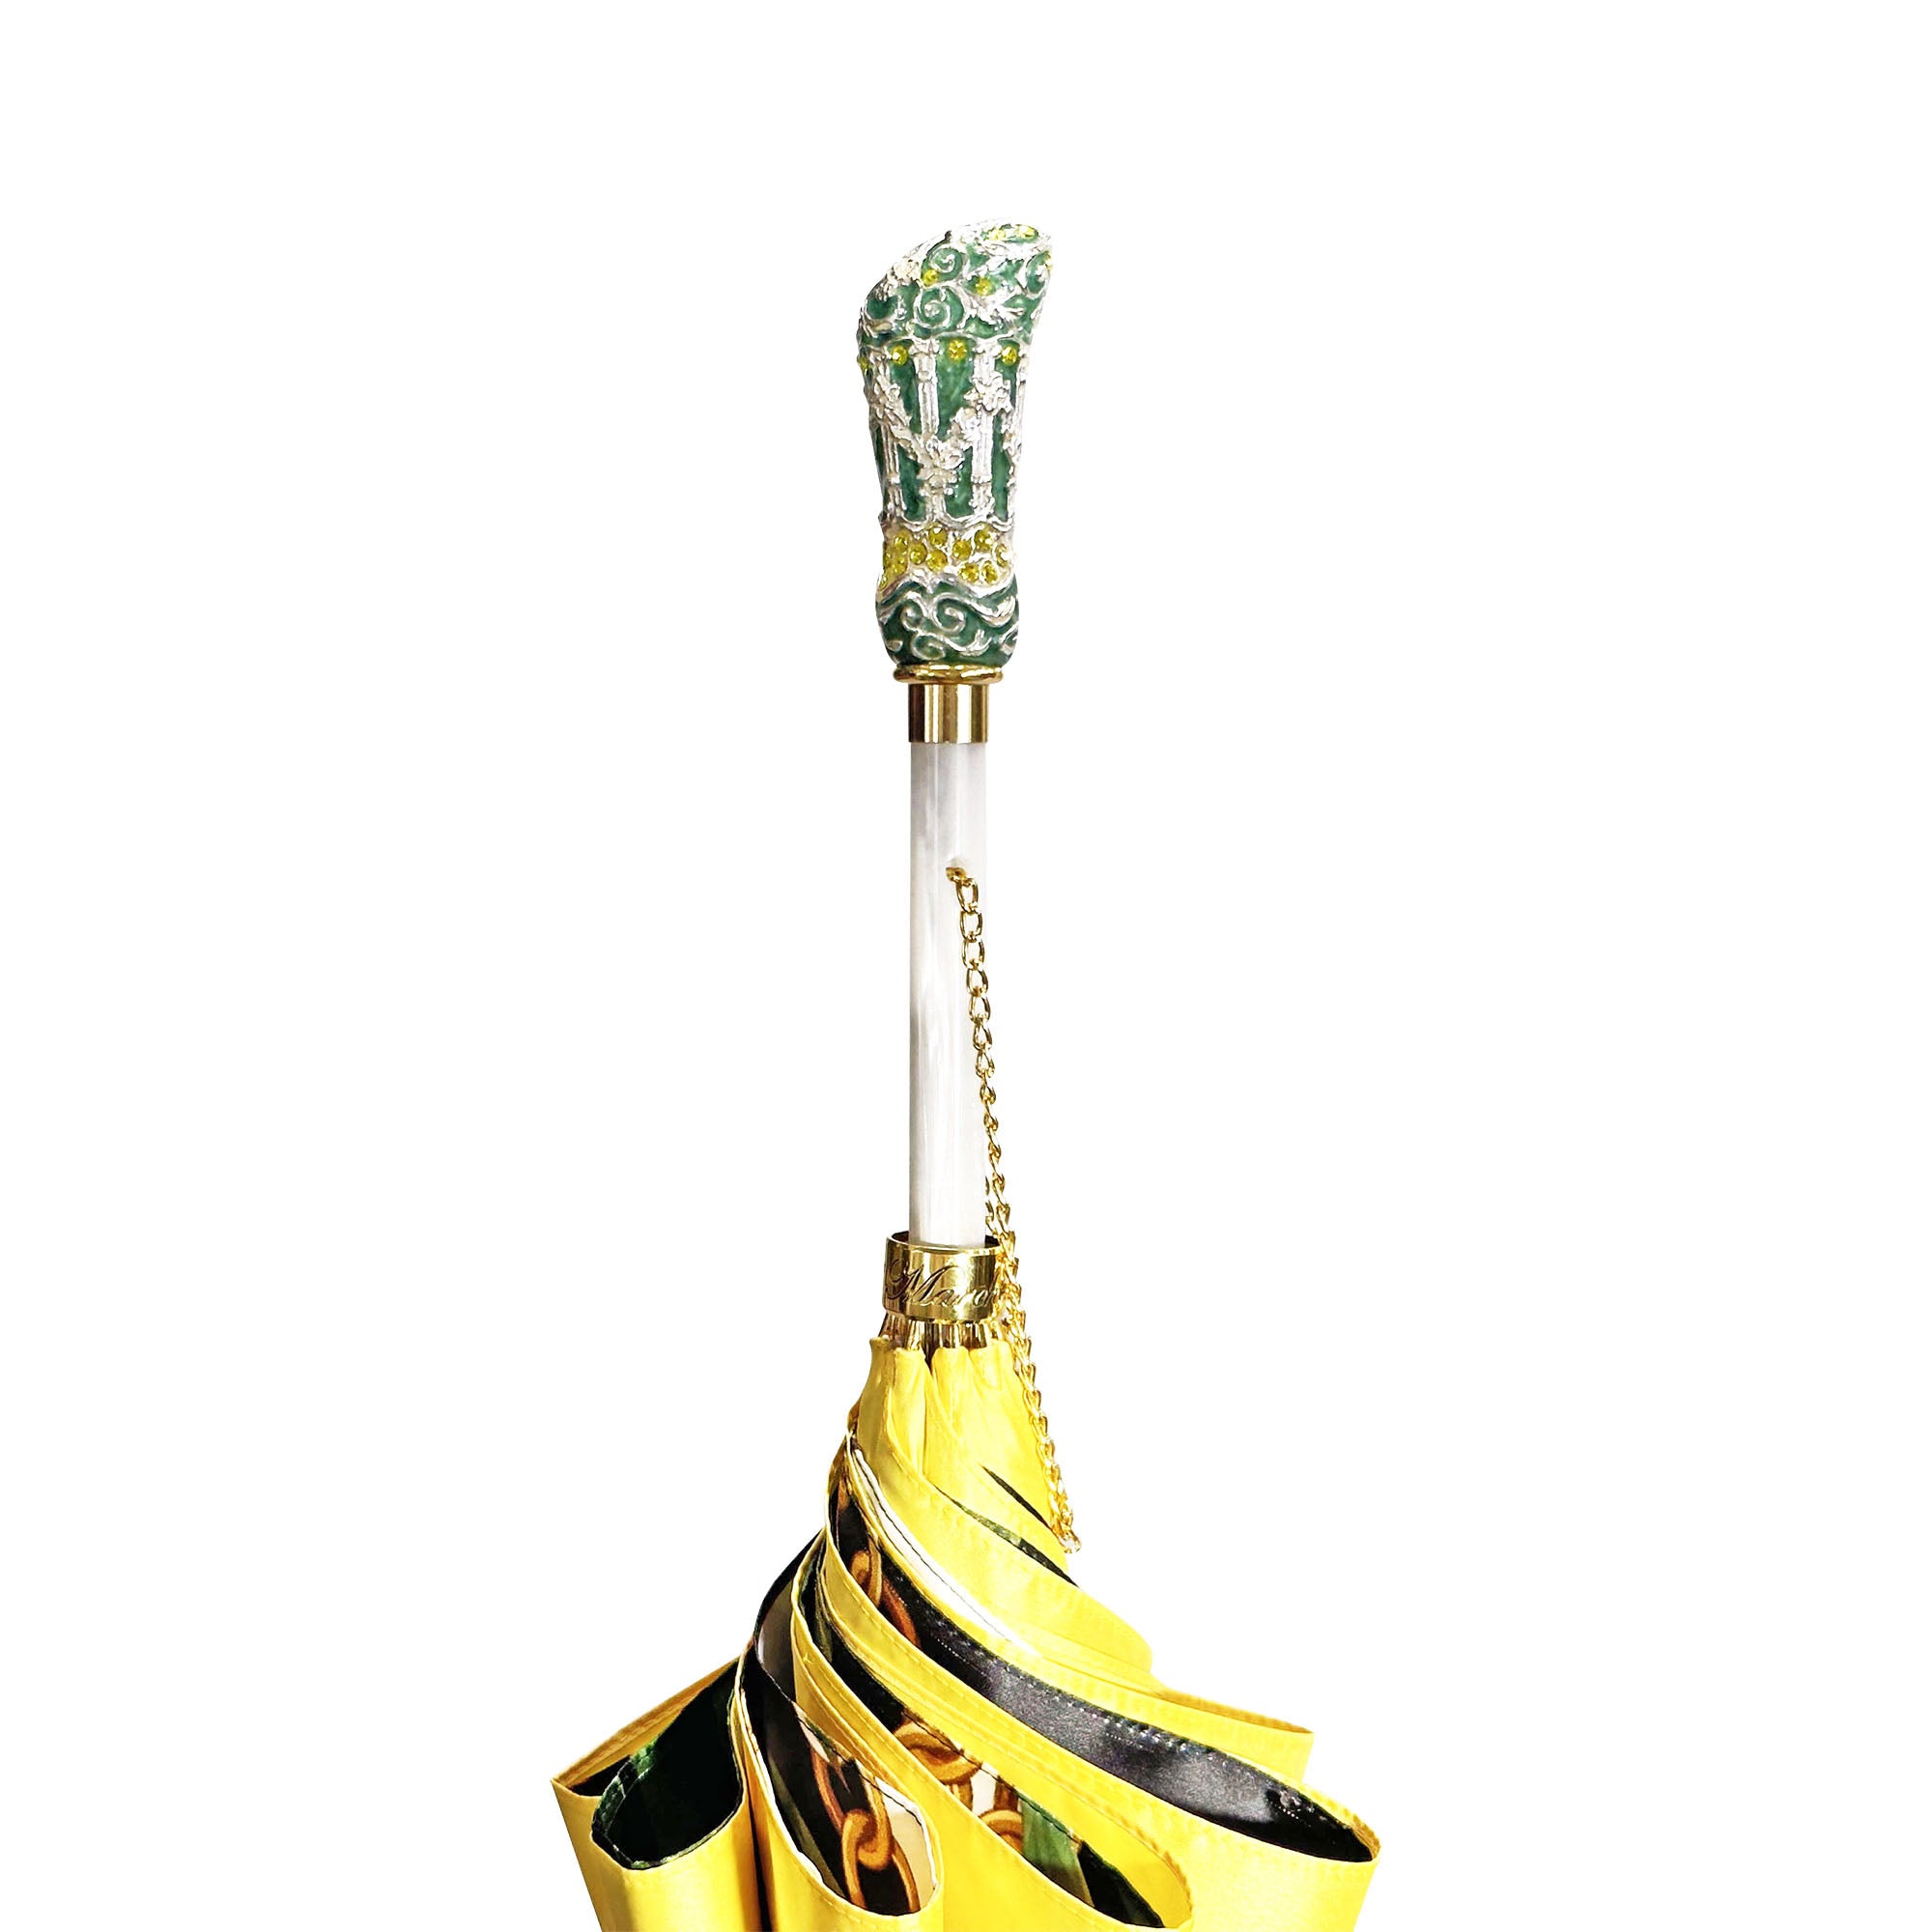 Wonderfull yellow Gold umbrella with Exclusive design